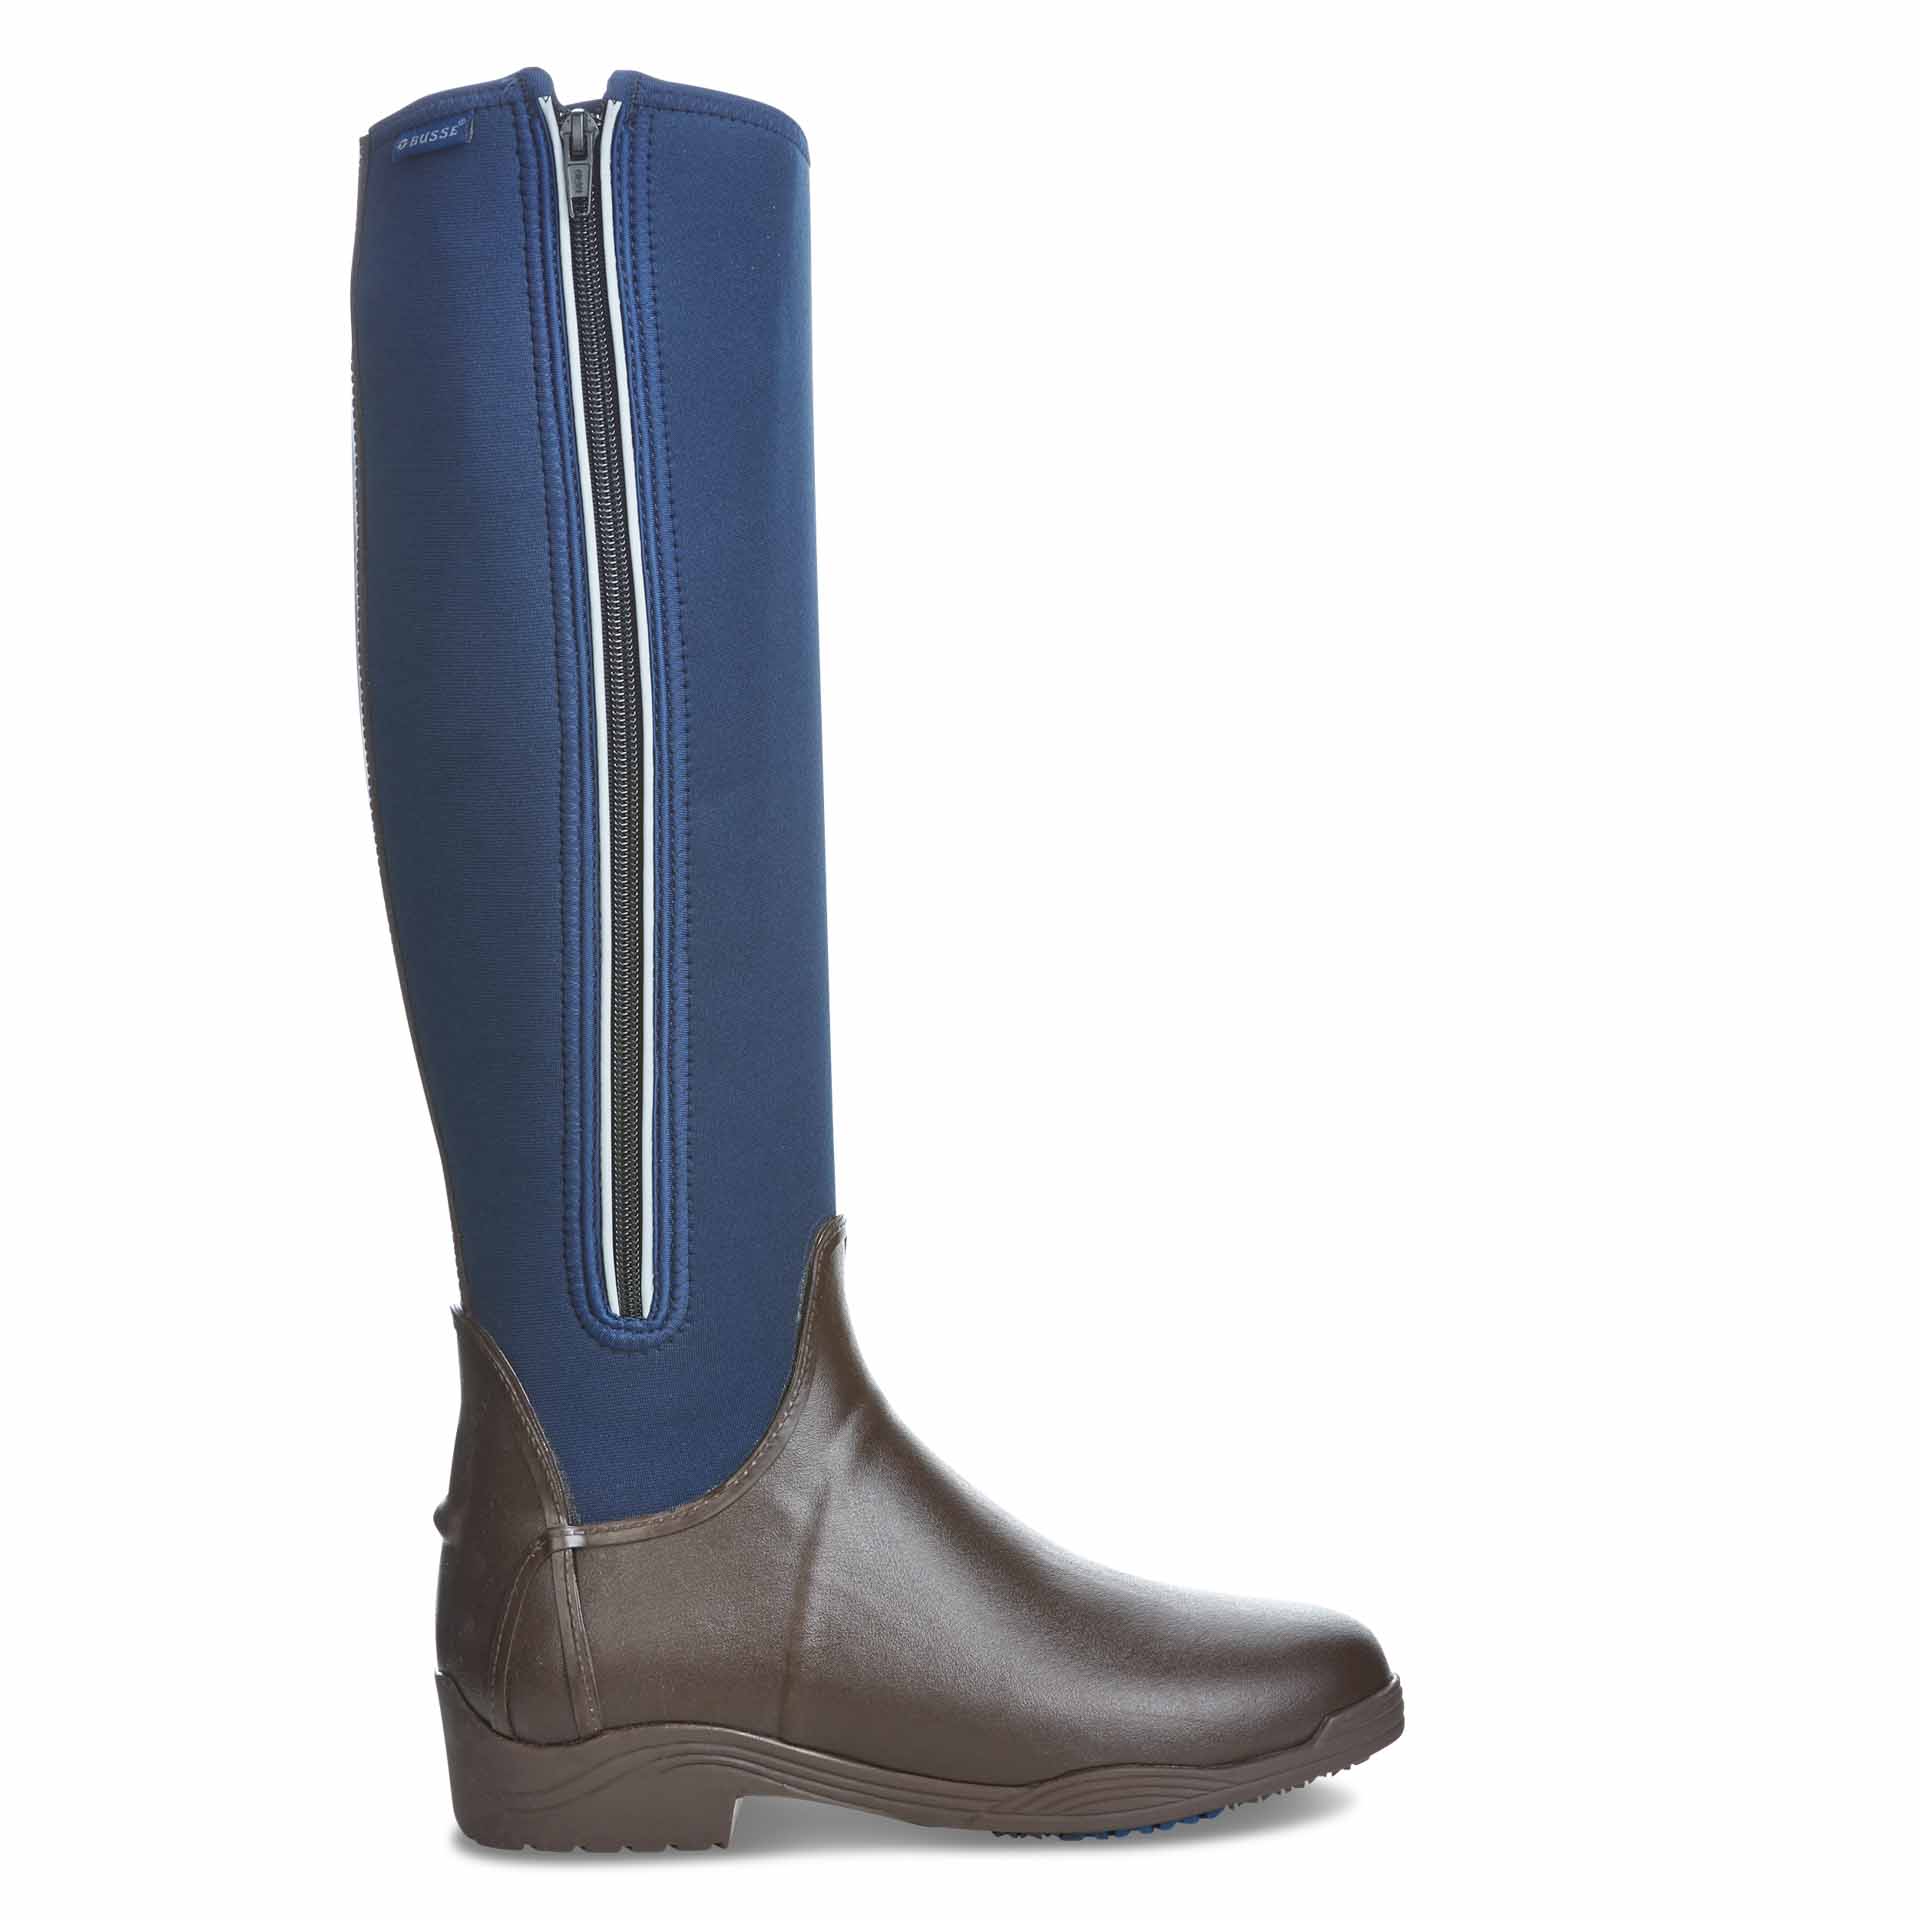 Boots d équitation mud BUSSE CALGARY, marron/navy